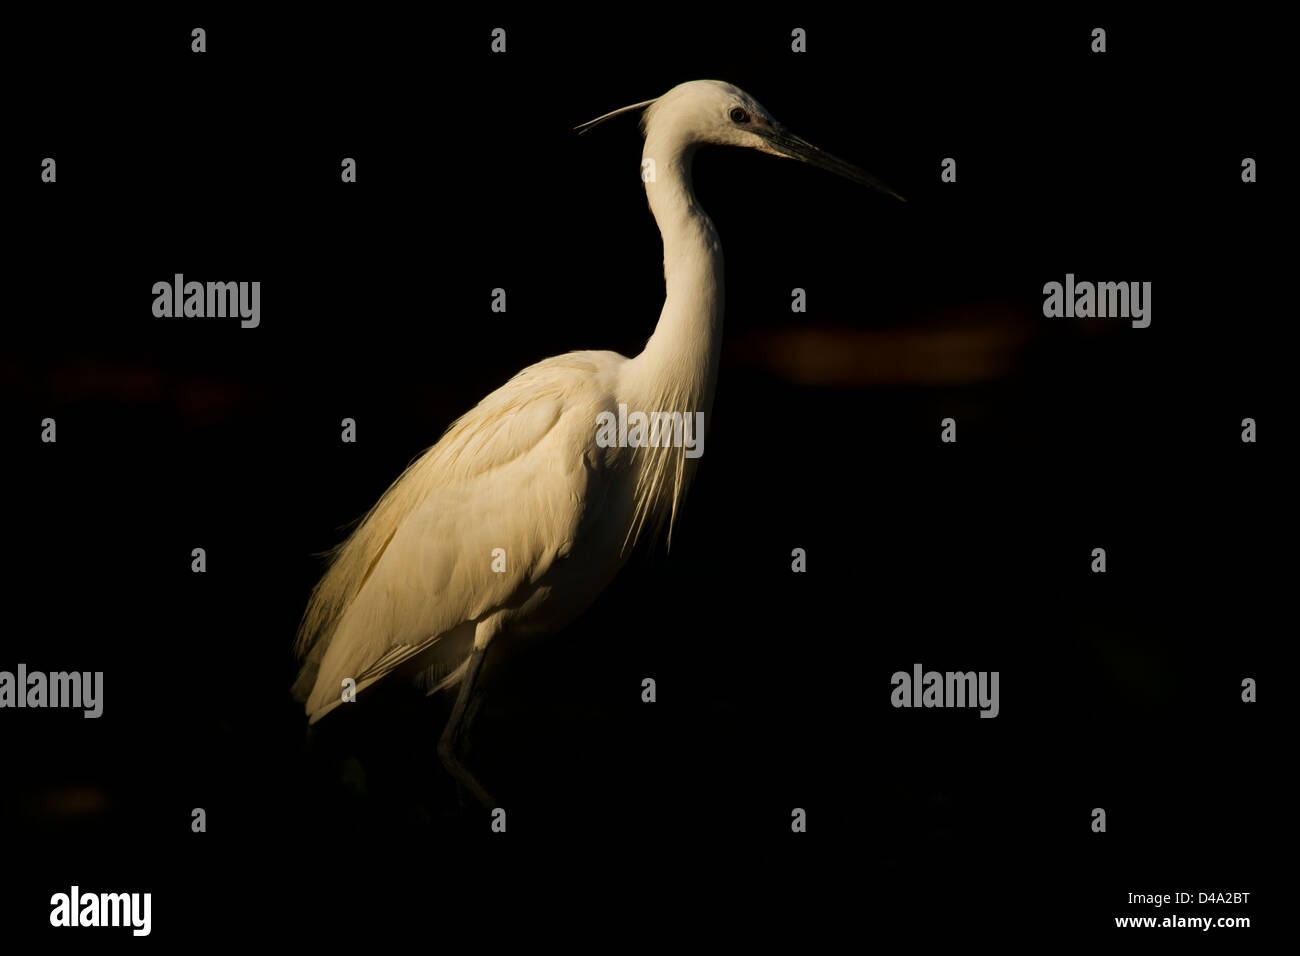 A Little egret in the dark Stock Photo